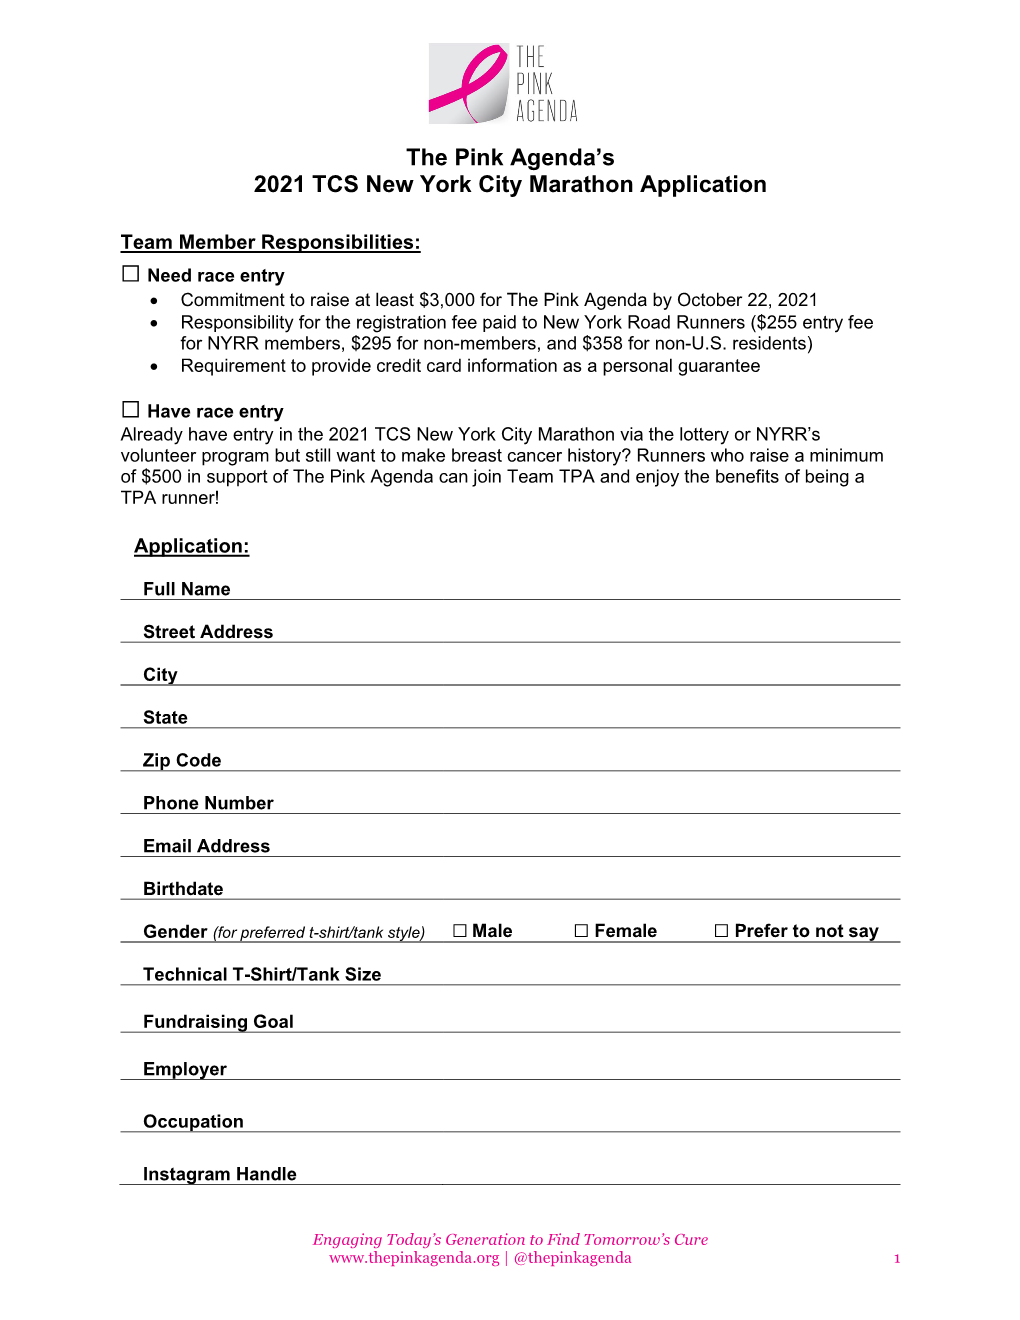 The Pink Agenda's 2021 TCS New York City Marathon Application